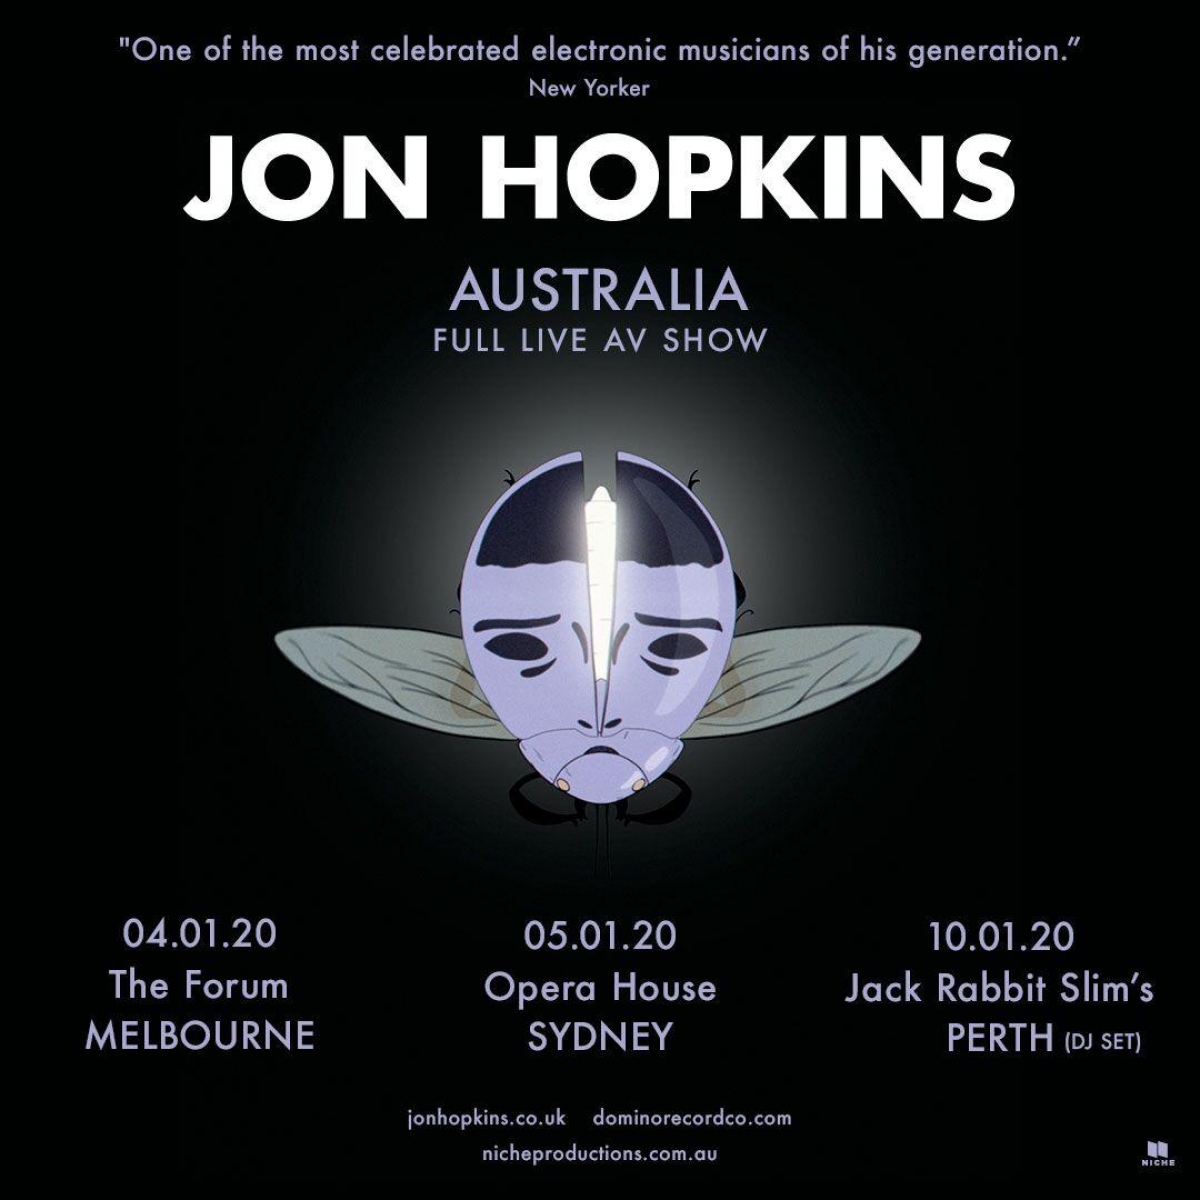 Australian tour dates - January 2020